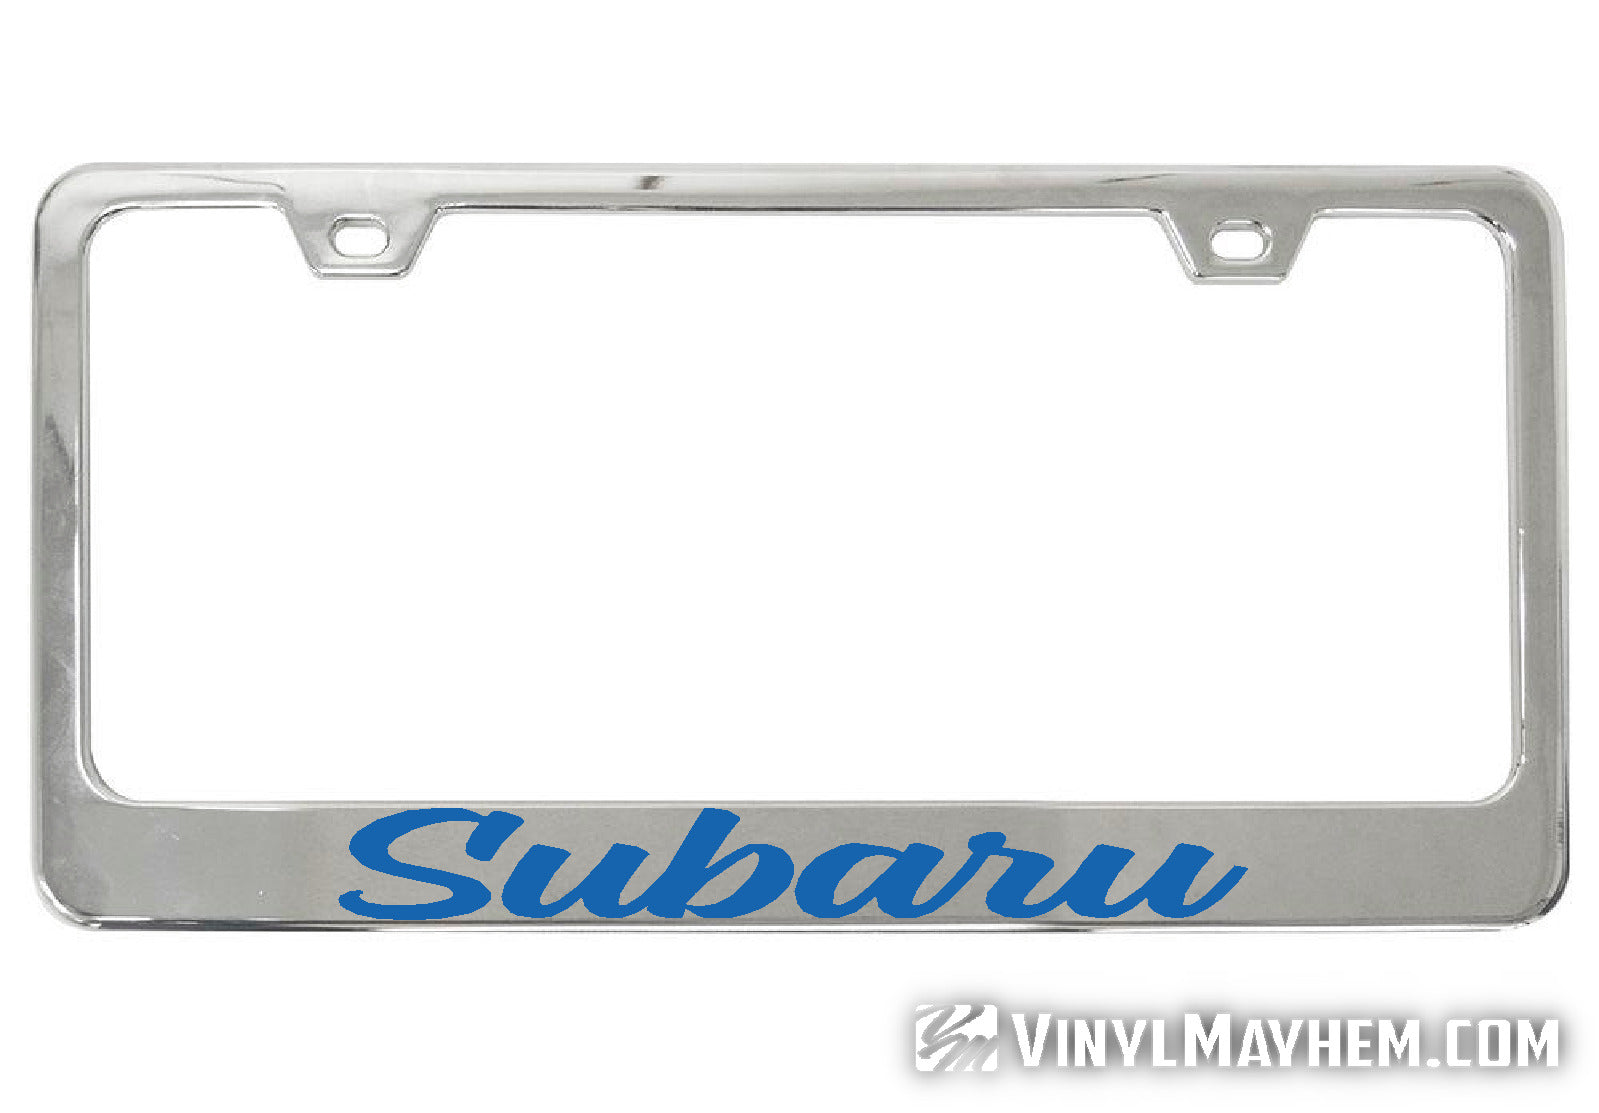 Subaru chrome license plate frame